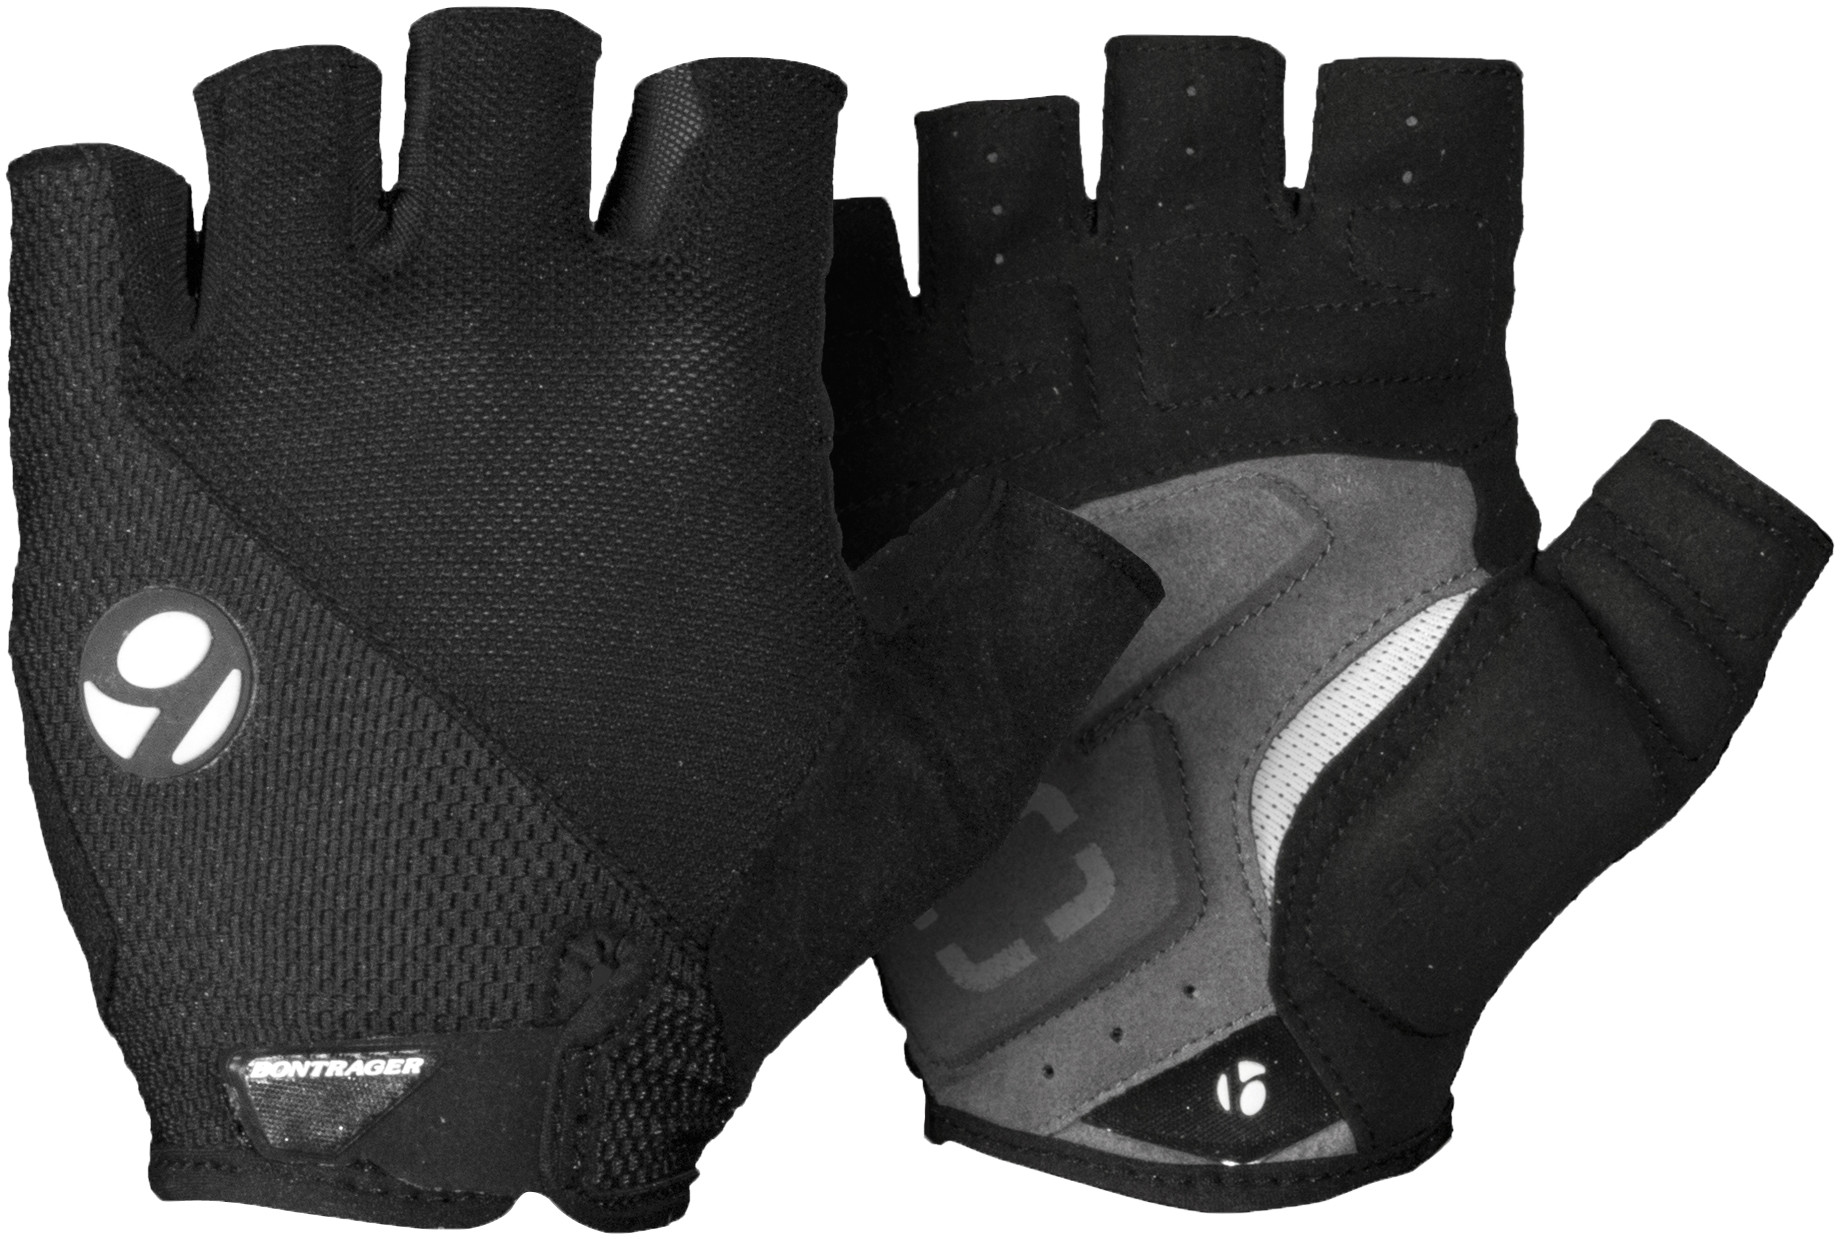 Bontrager Race Gel Cycling Glove - Mens - Gloves - Clothing - Shop ...